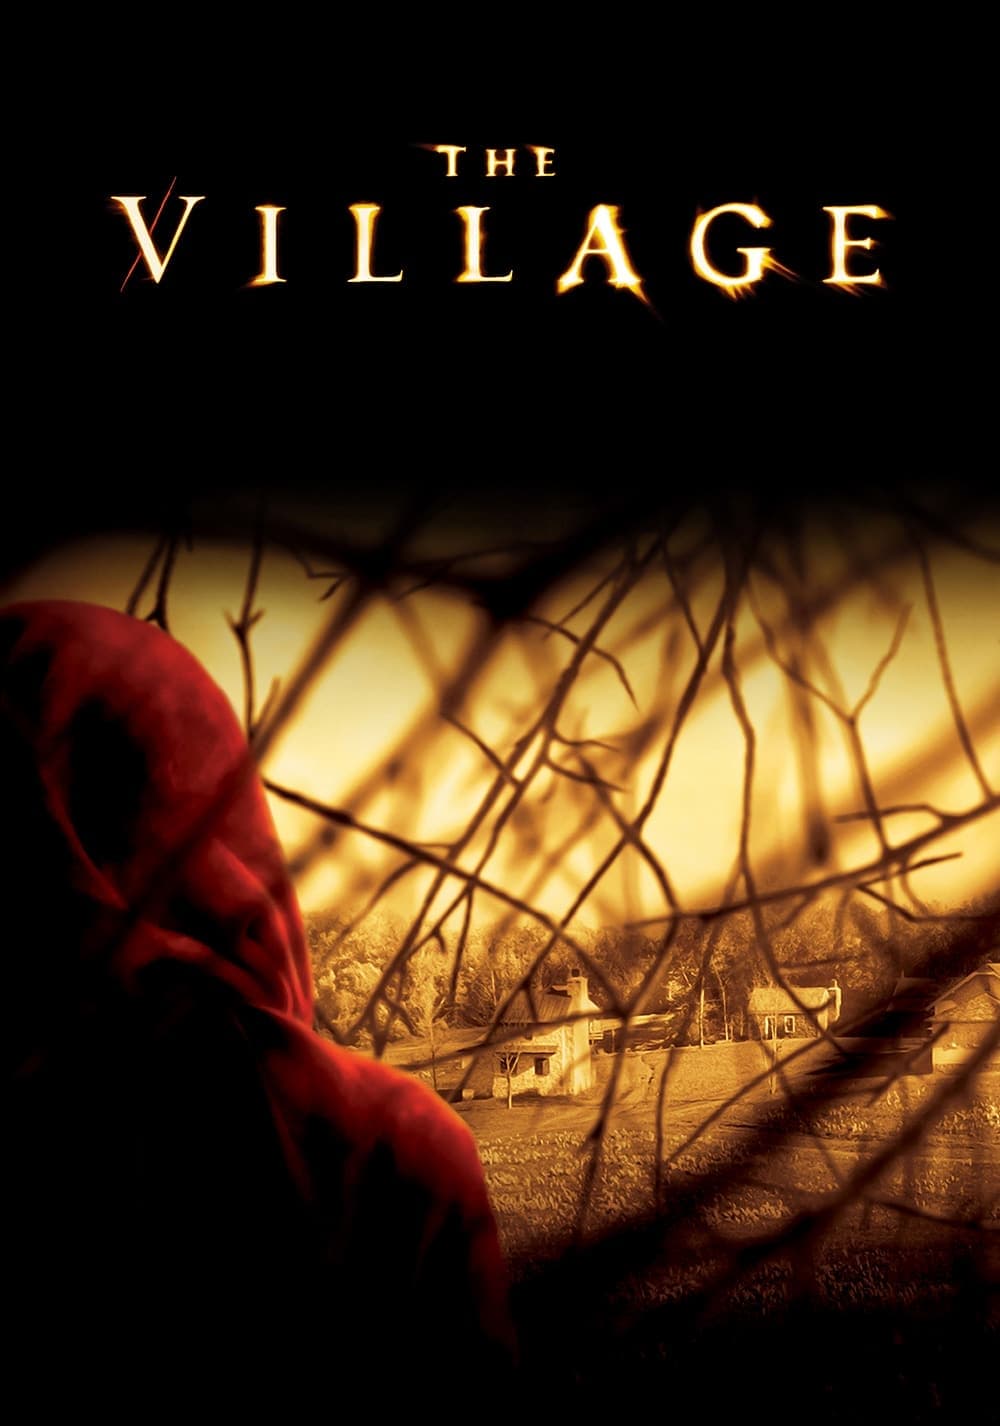 The Village [HD] (2004)